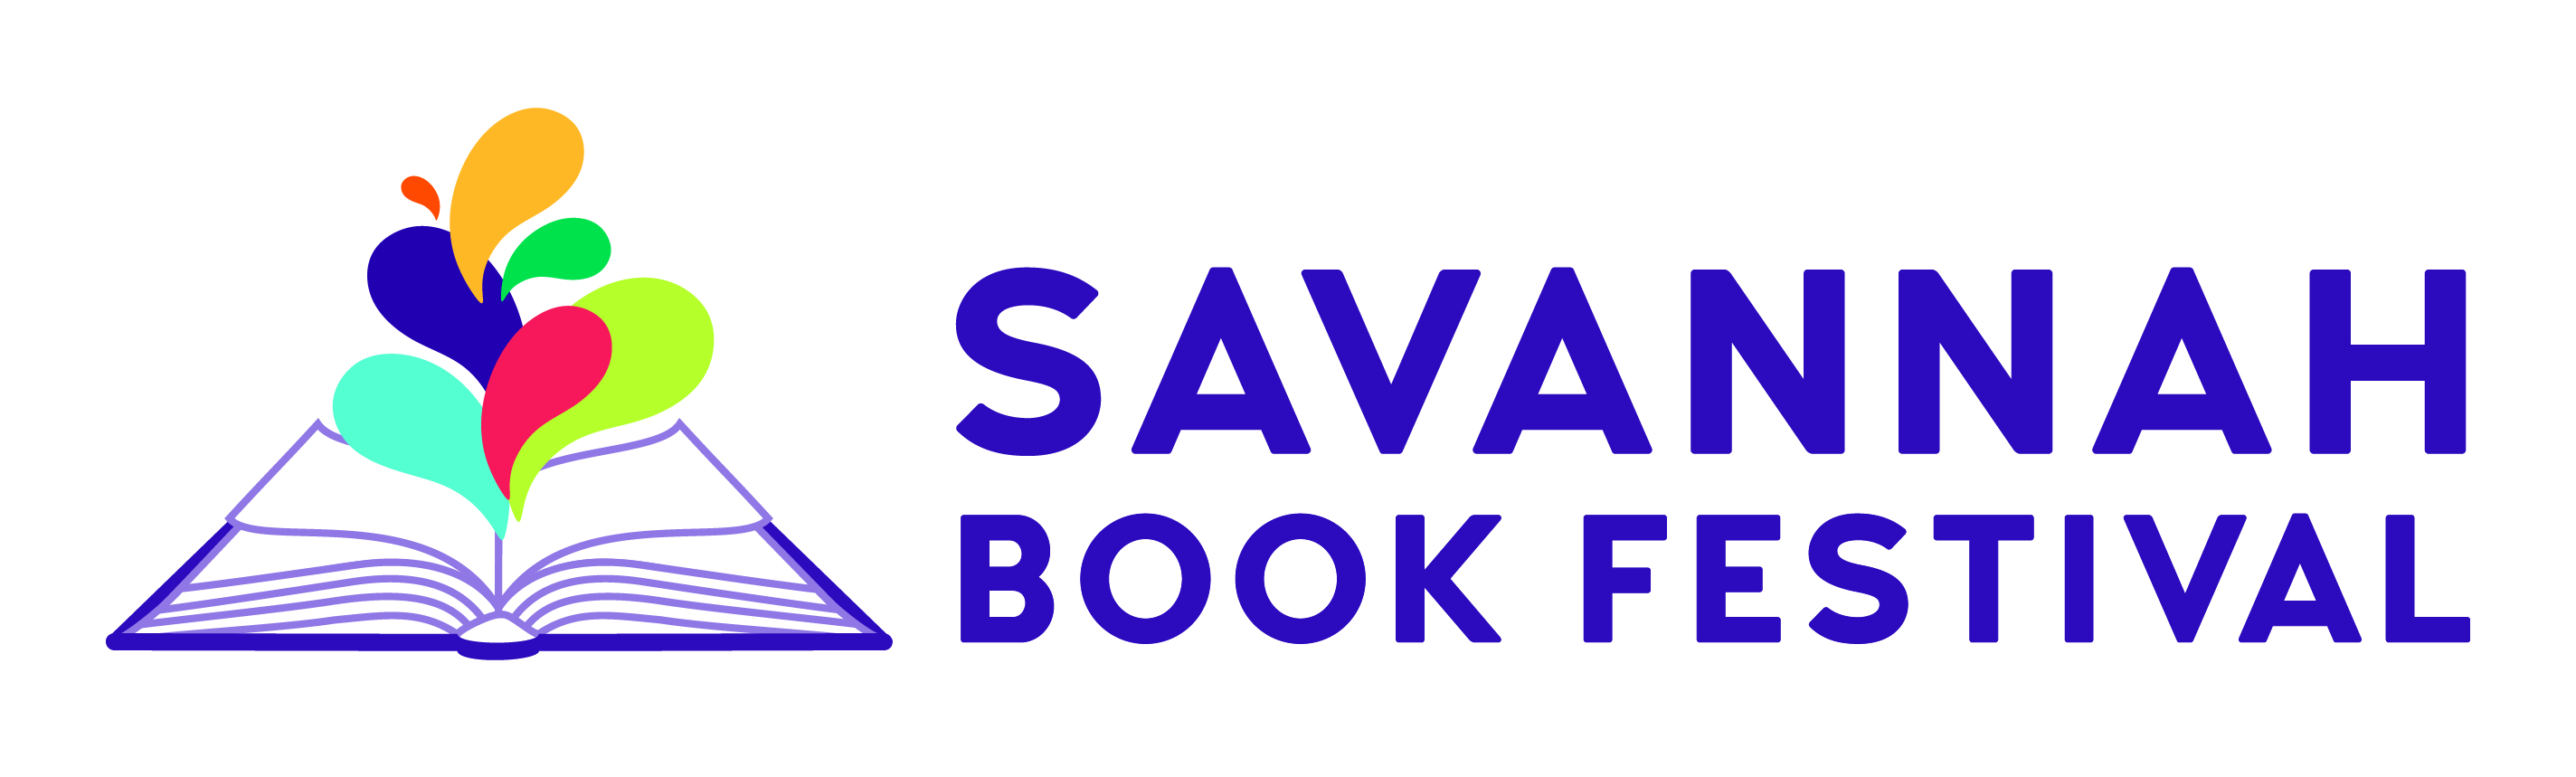 Savannah Book Festival Crowdcast